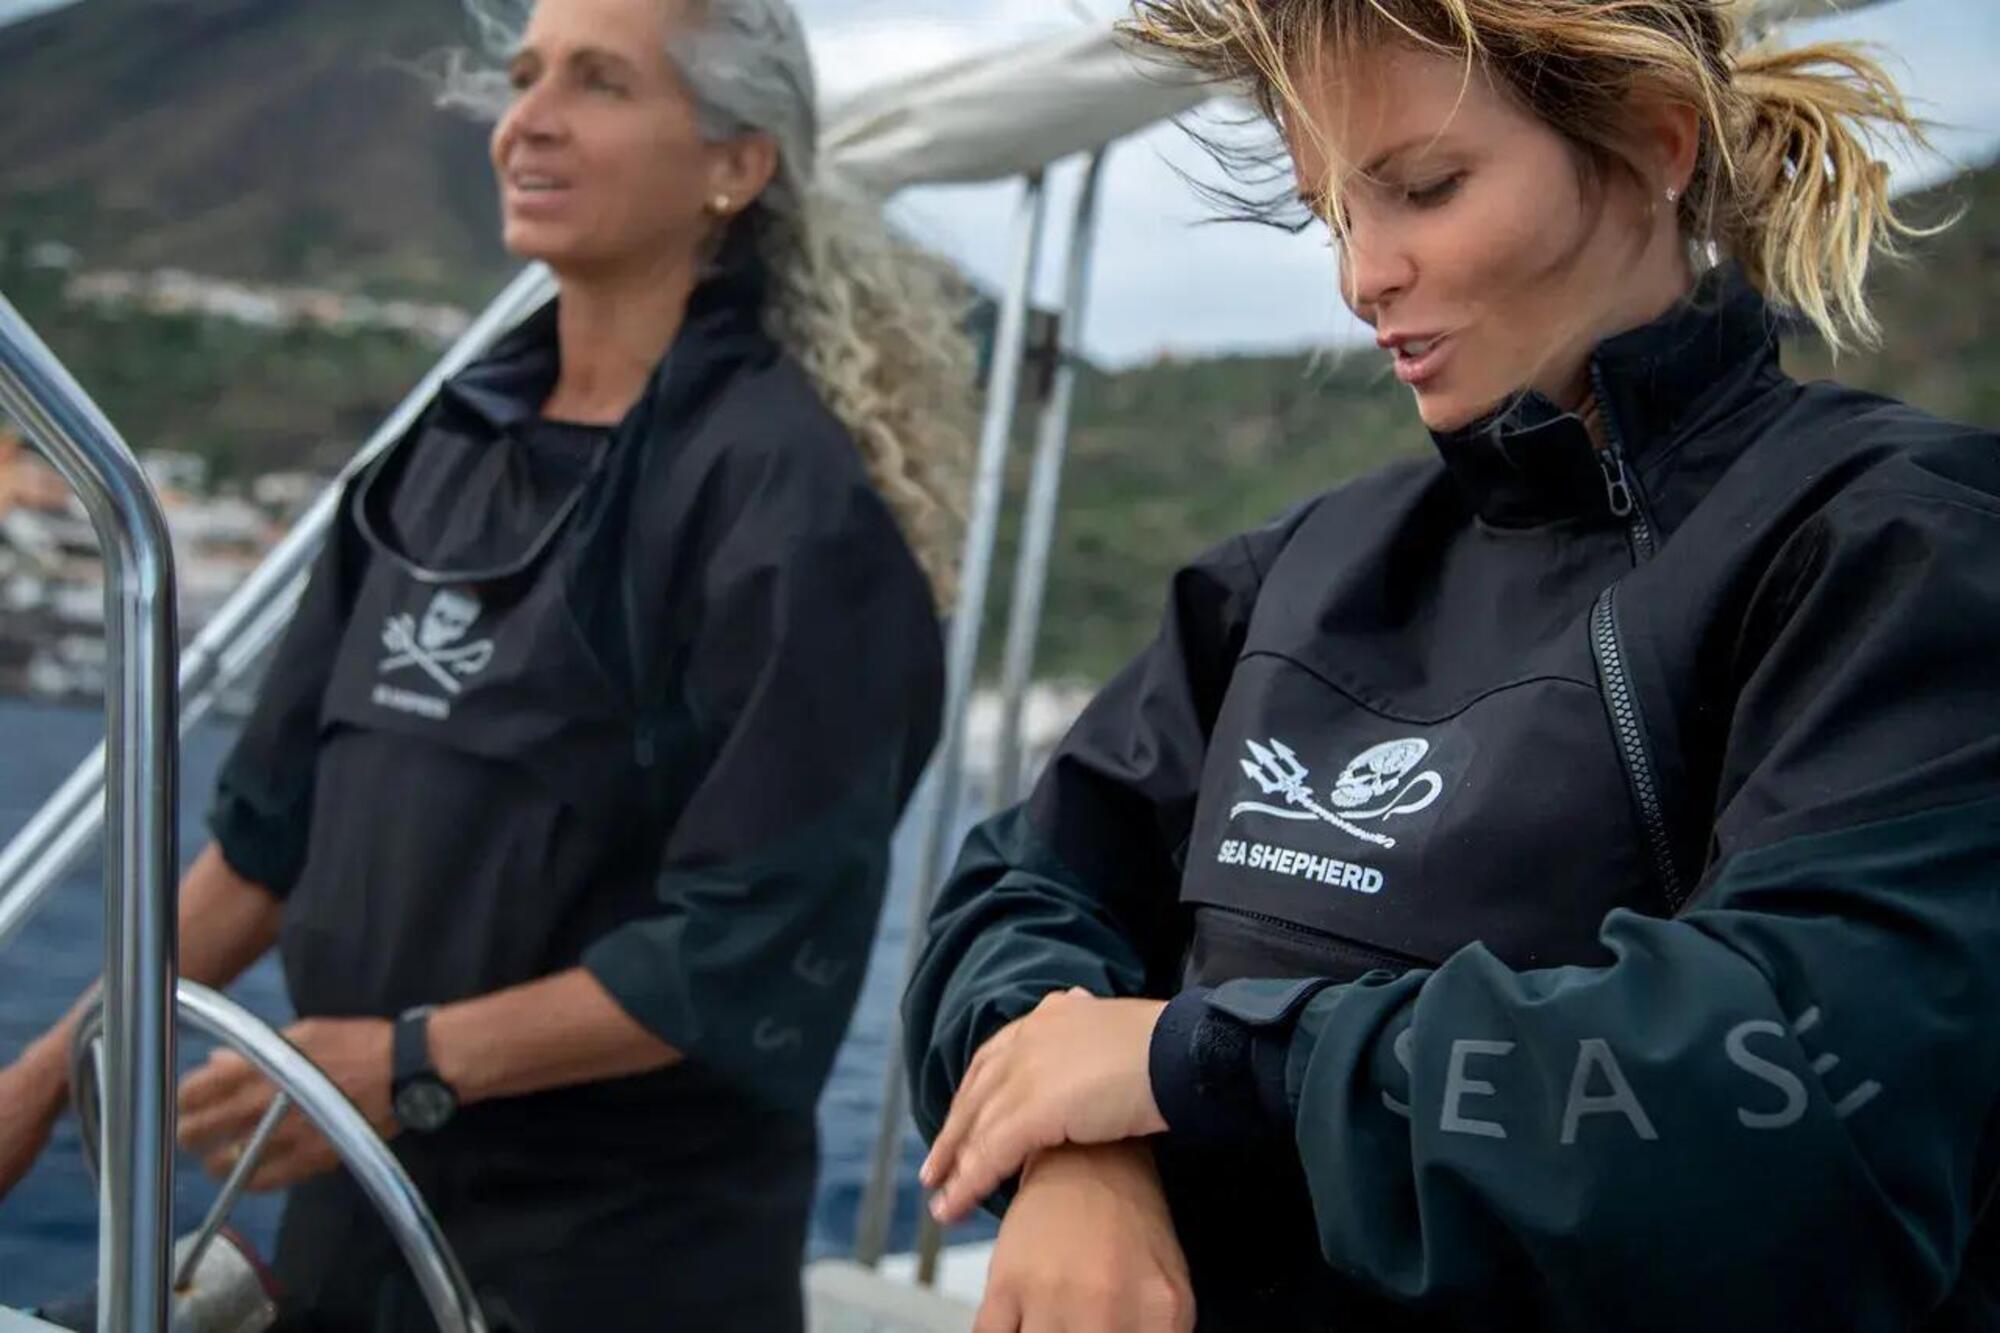 Irene Saderini x Sea Shepherd 2022 Film Amazon Prime Video